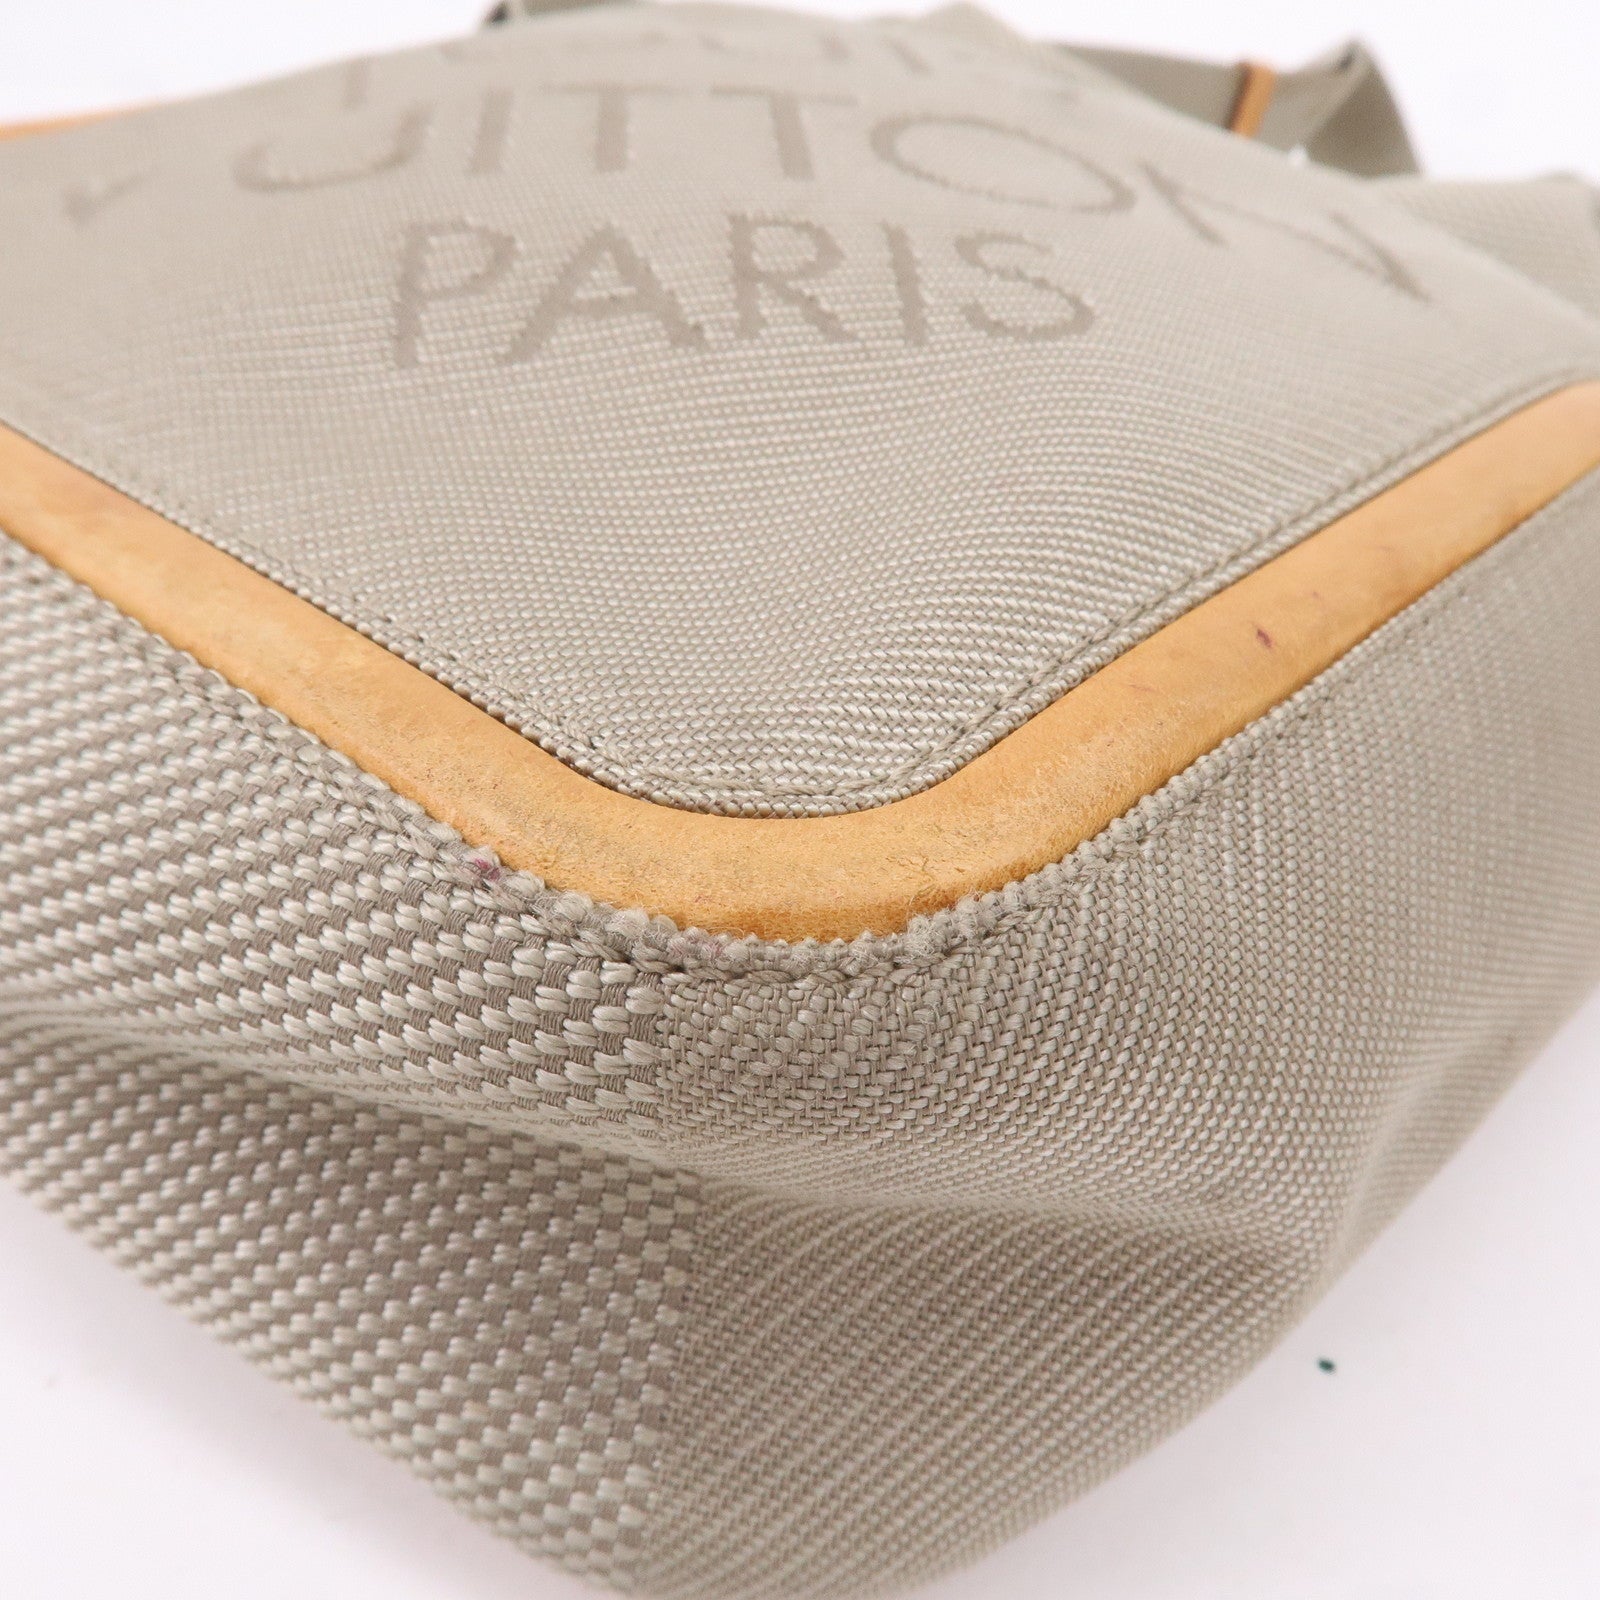 Louis Vuitton Citadan Shoulder Bag M93224 Damier Jean Canvas Tail France  2005 Brown SP1005 Crossbody Zipper Sitadan Men's